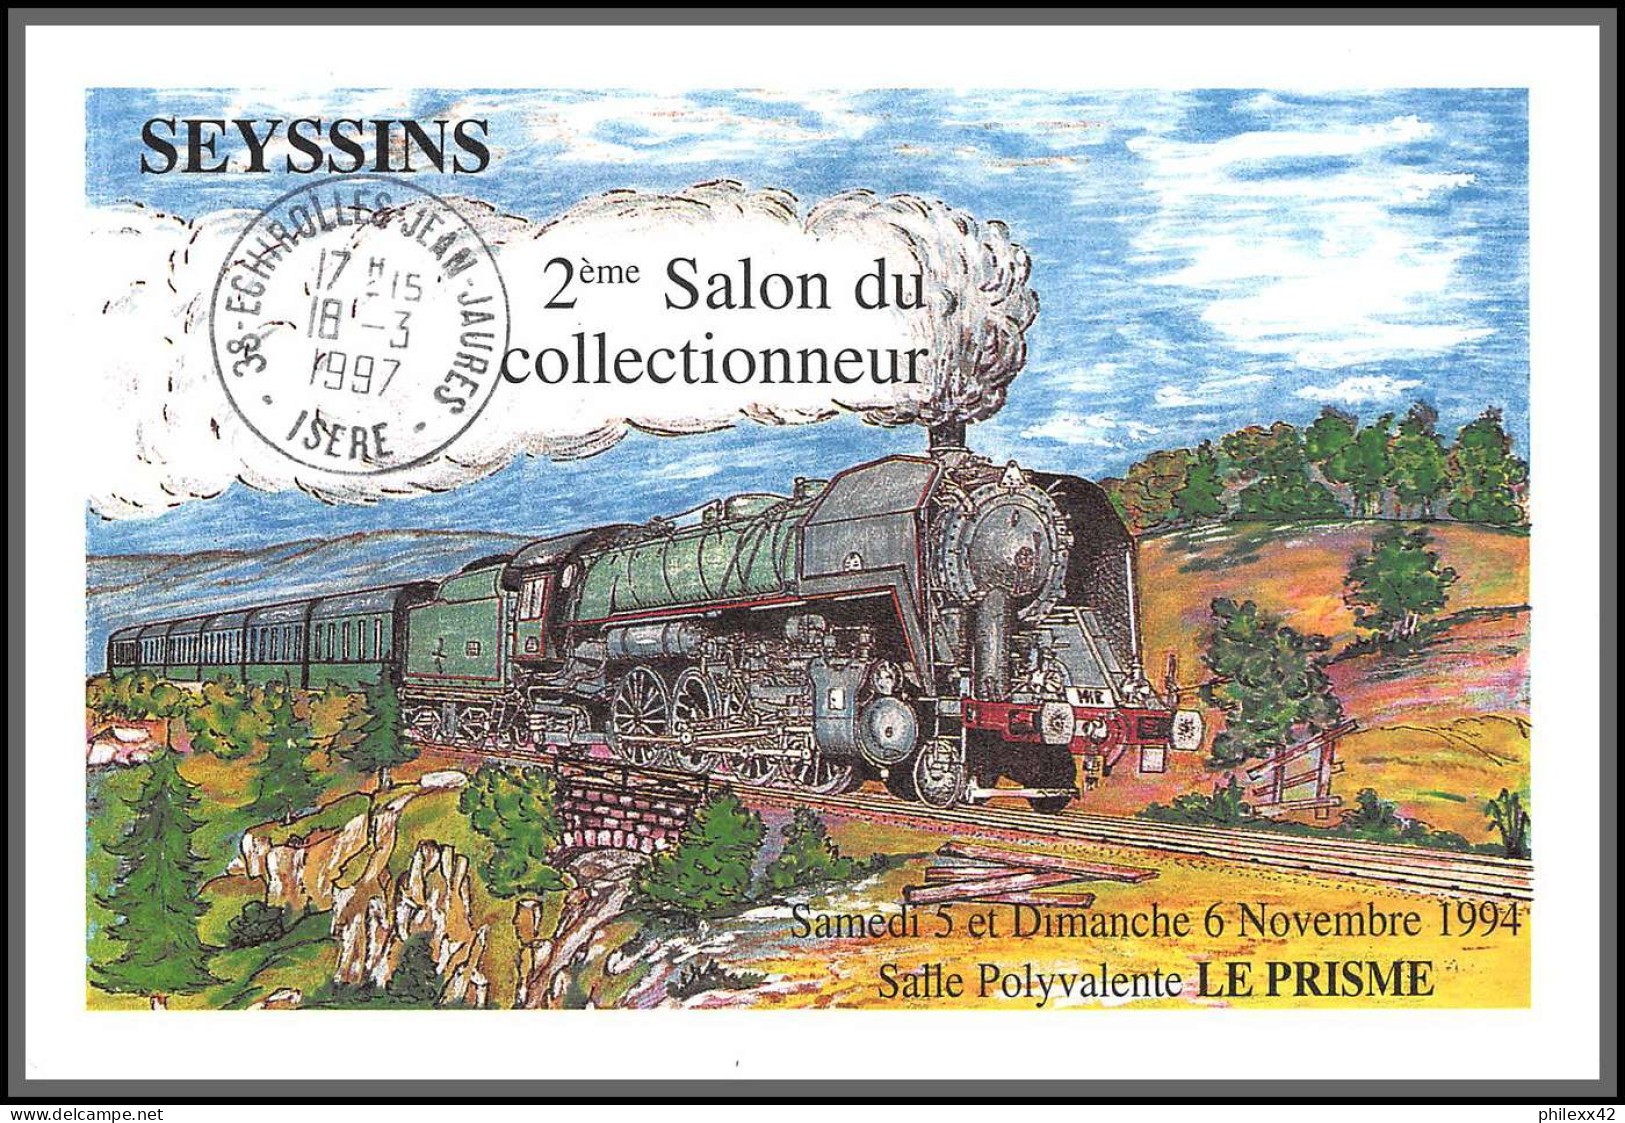 74234 Mixte Marianne Bicentenaire 14/3/1997 Sada Mayotte Echirolles Isère France Carte Postcard Colonies - Briefe U. Dokumente